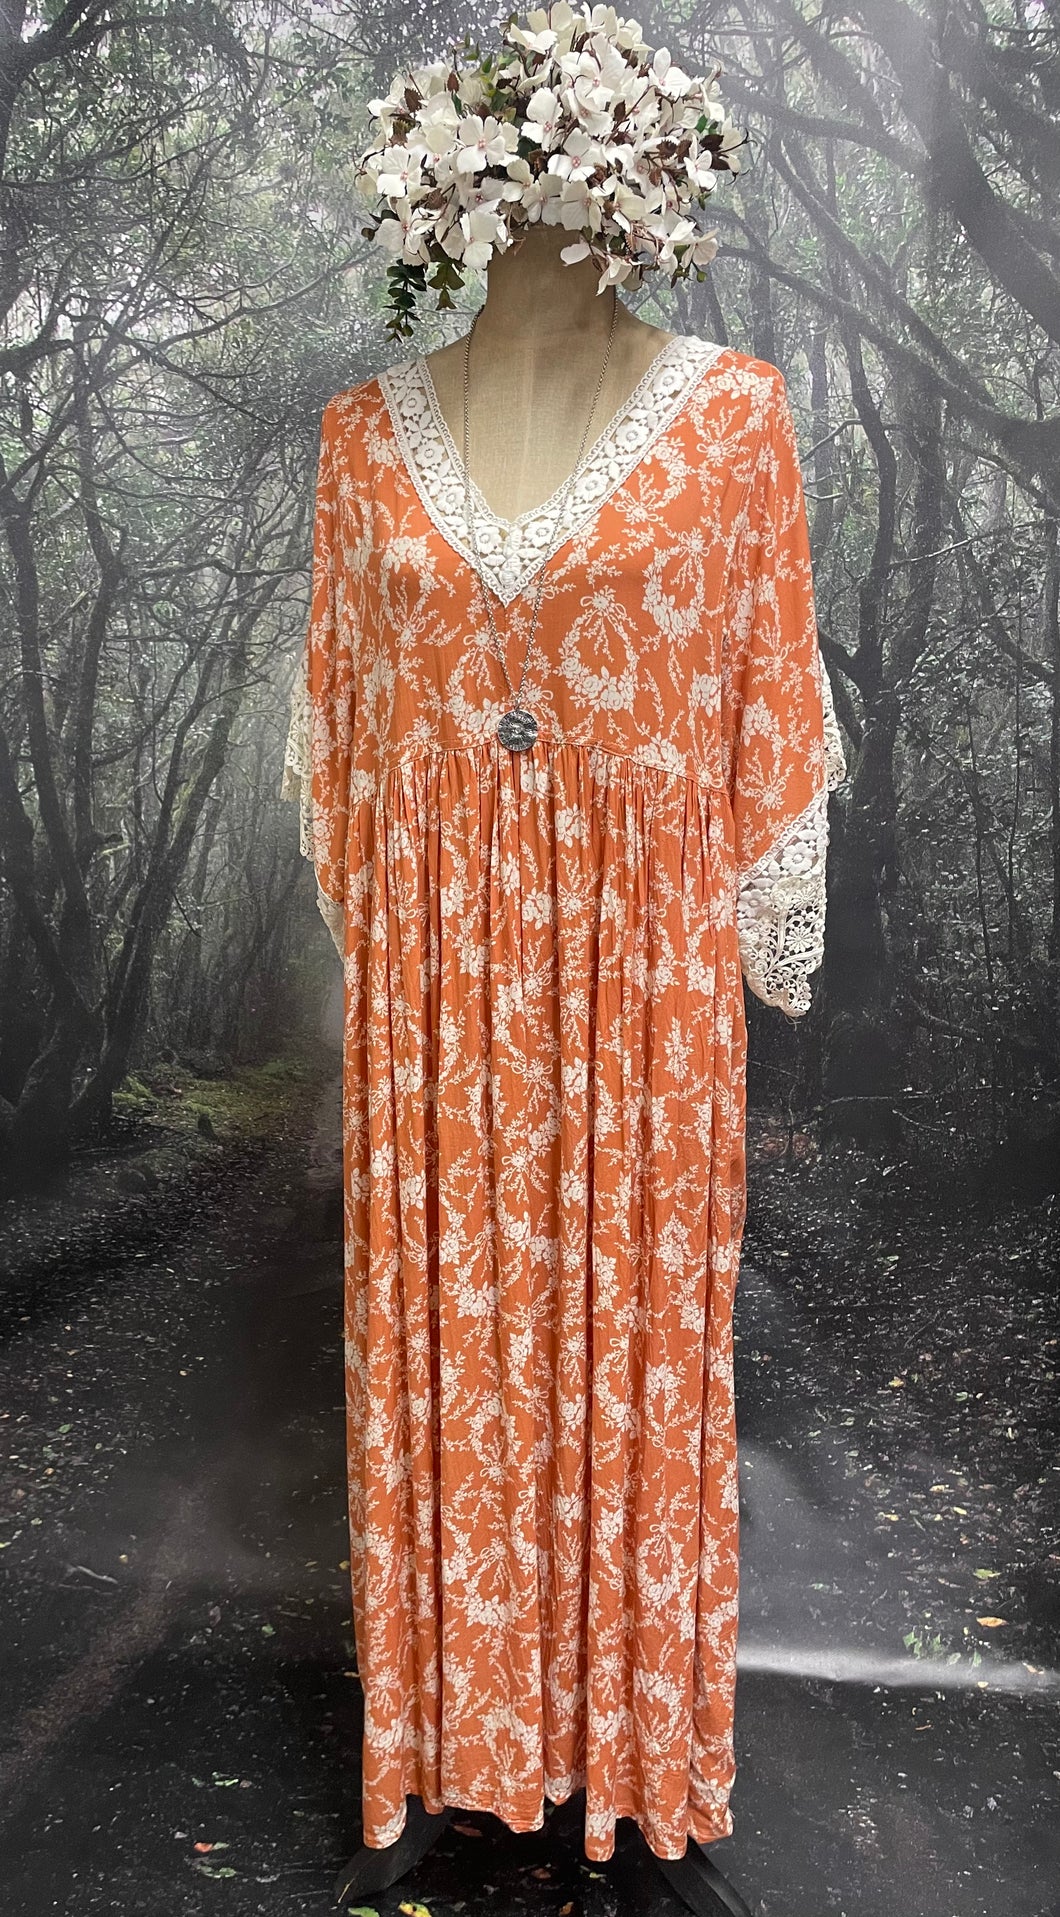 Tangerine and cream Violet dress